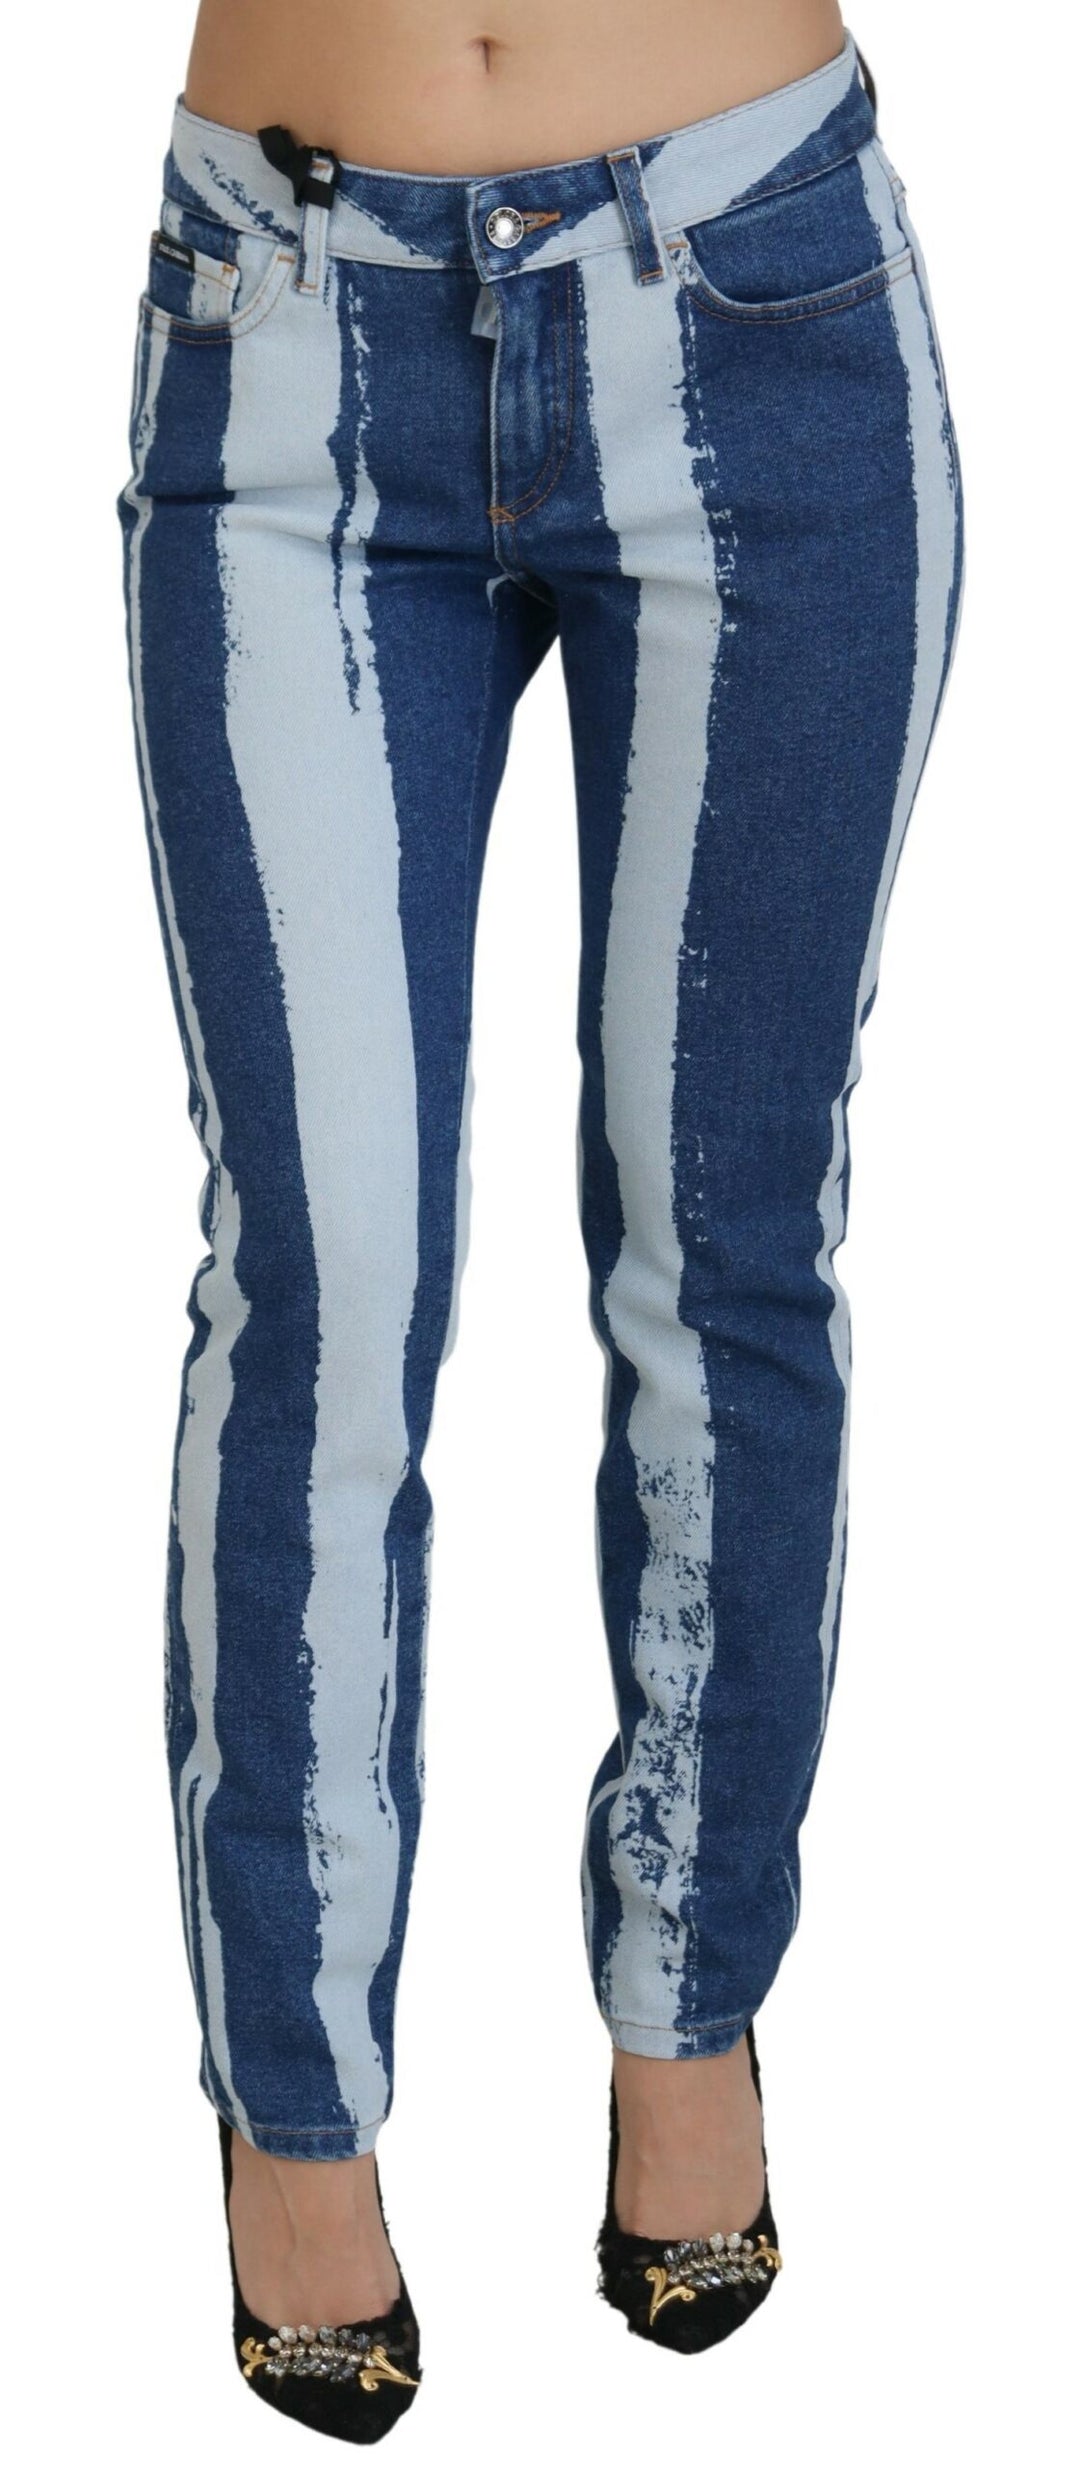 Cobalt Blue Stripes Skinny Denim Cotton Jeans